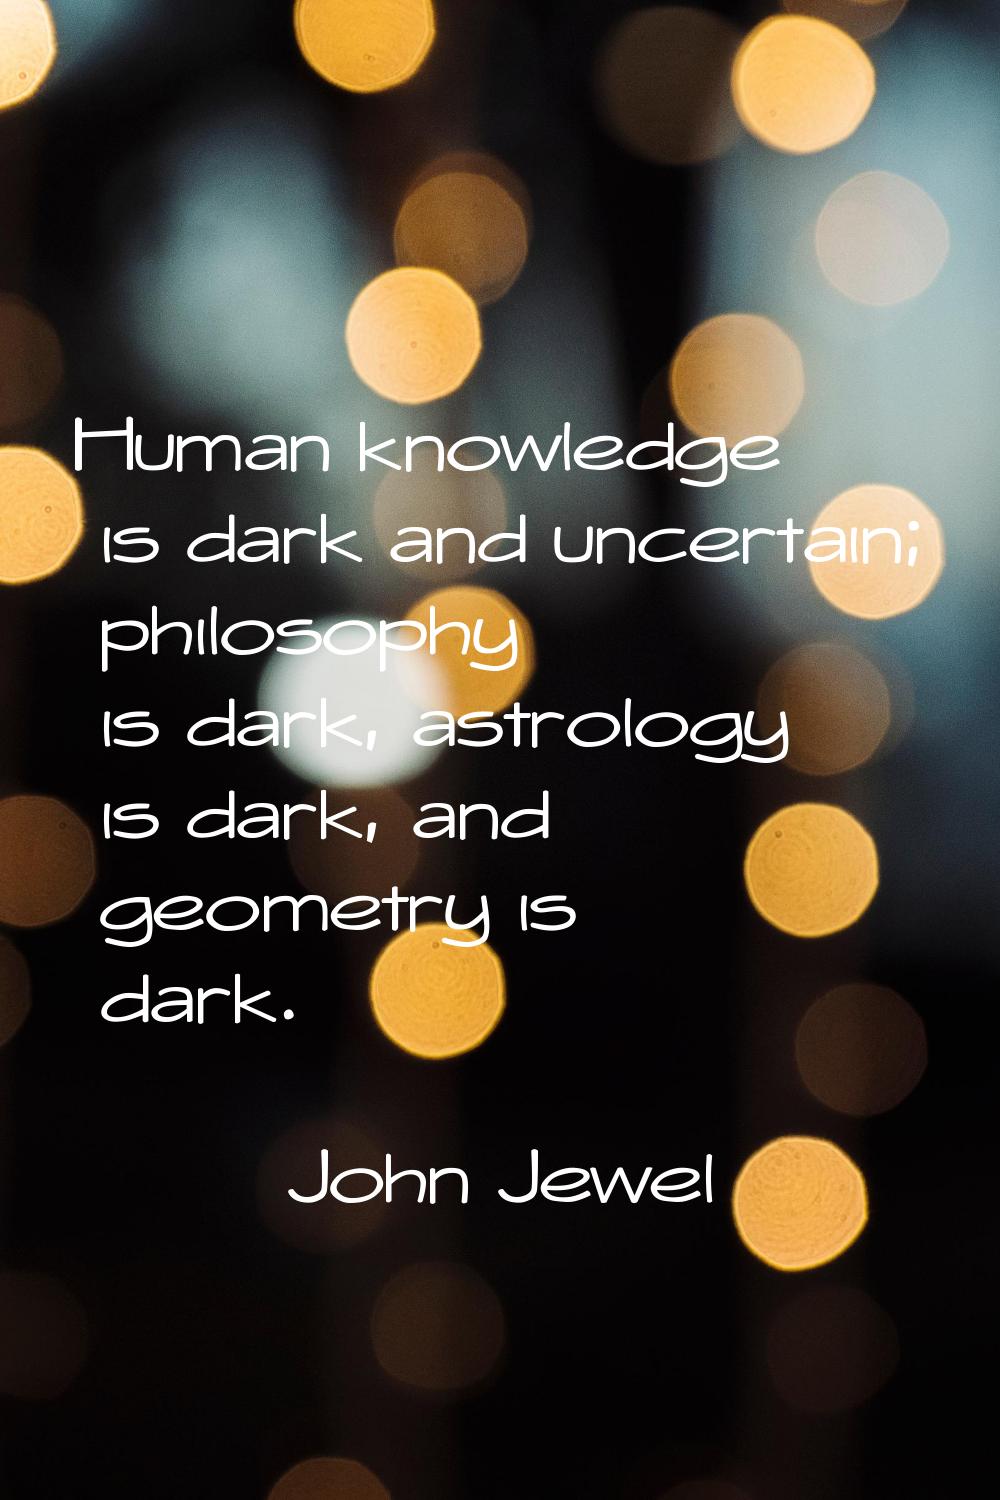 Human knowledge is dark and uncertain; philosophy is dark, astrology is dark, and geometry is dark.